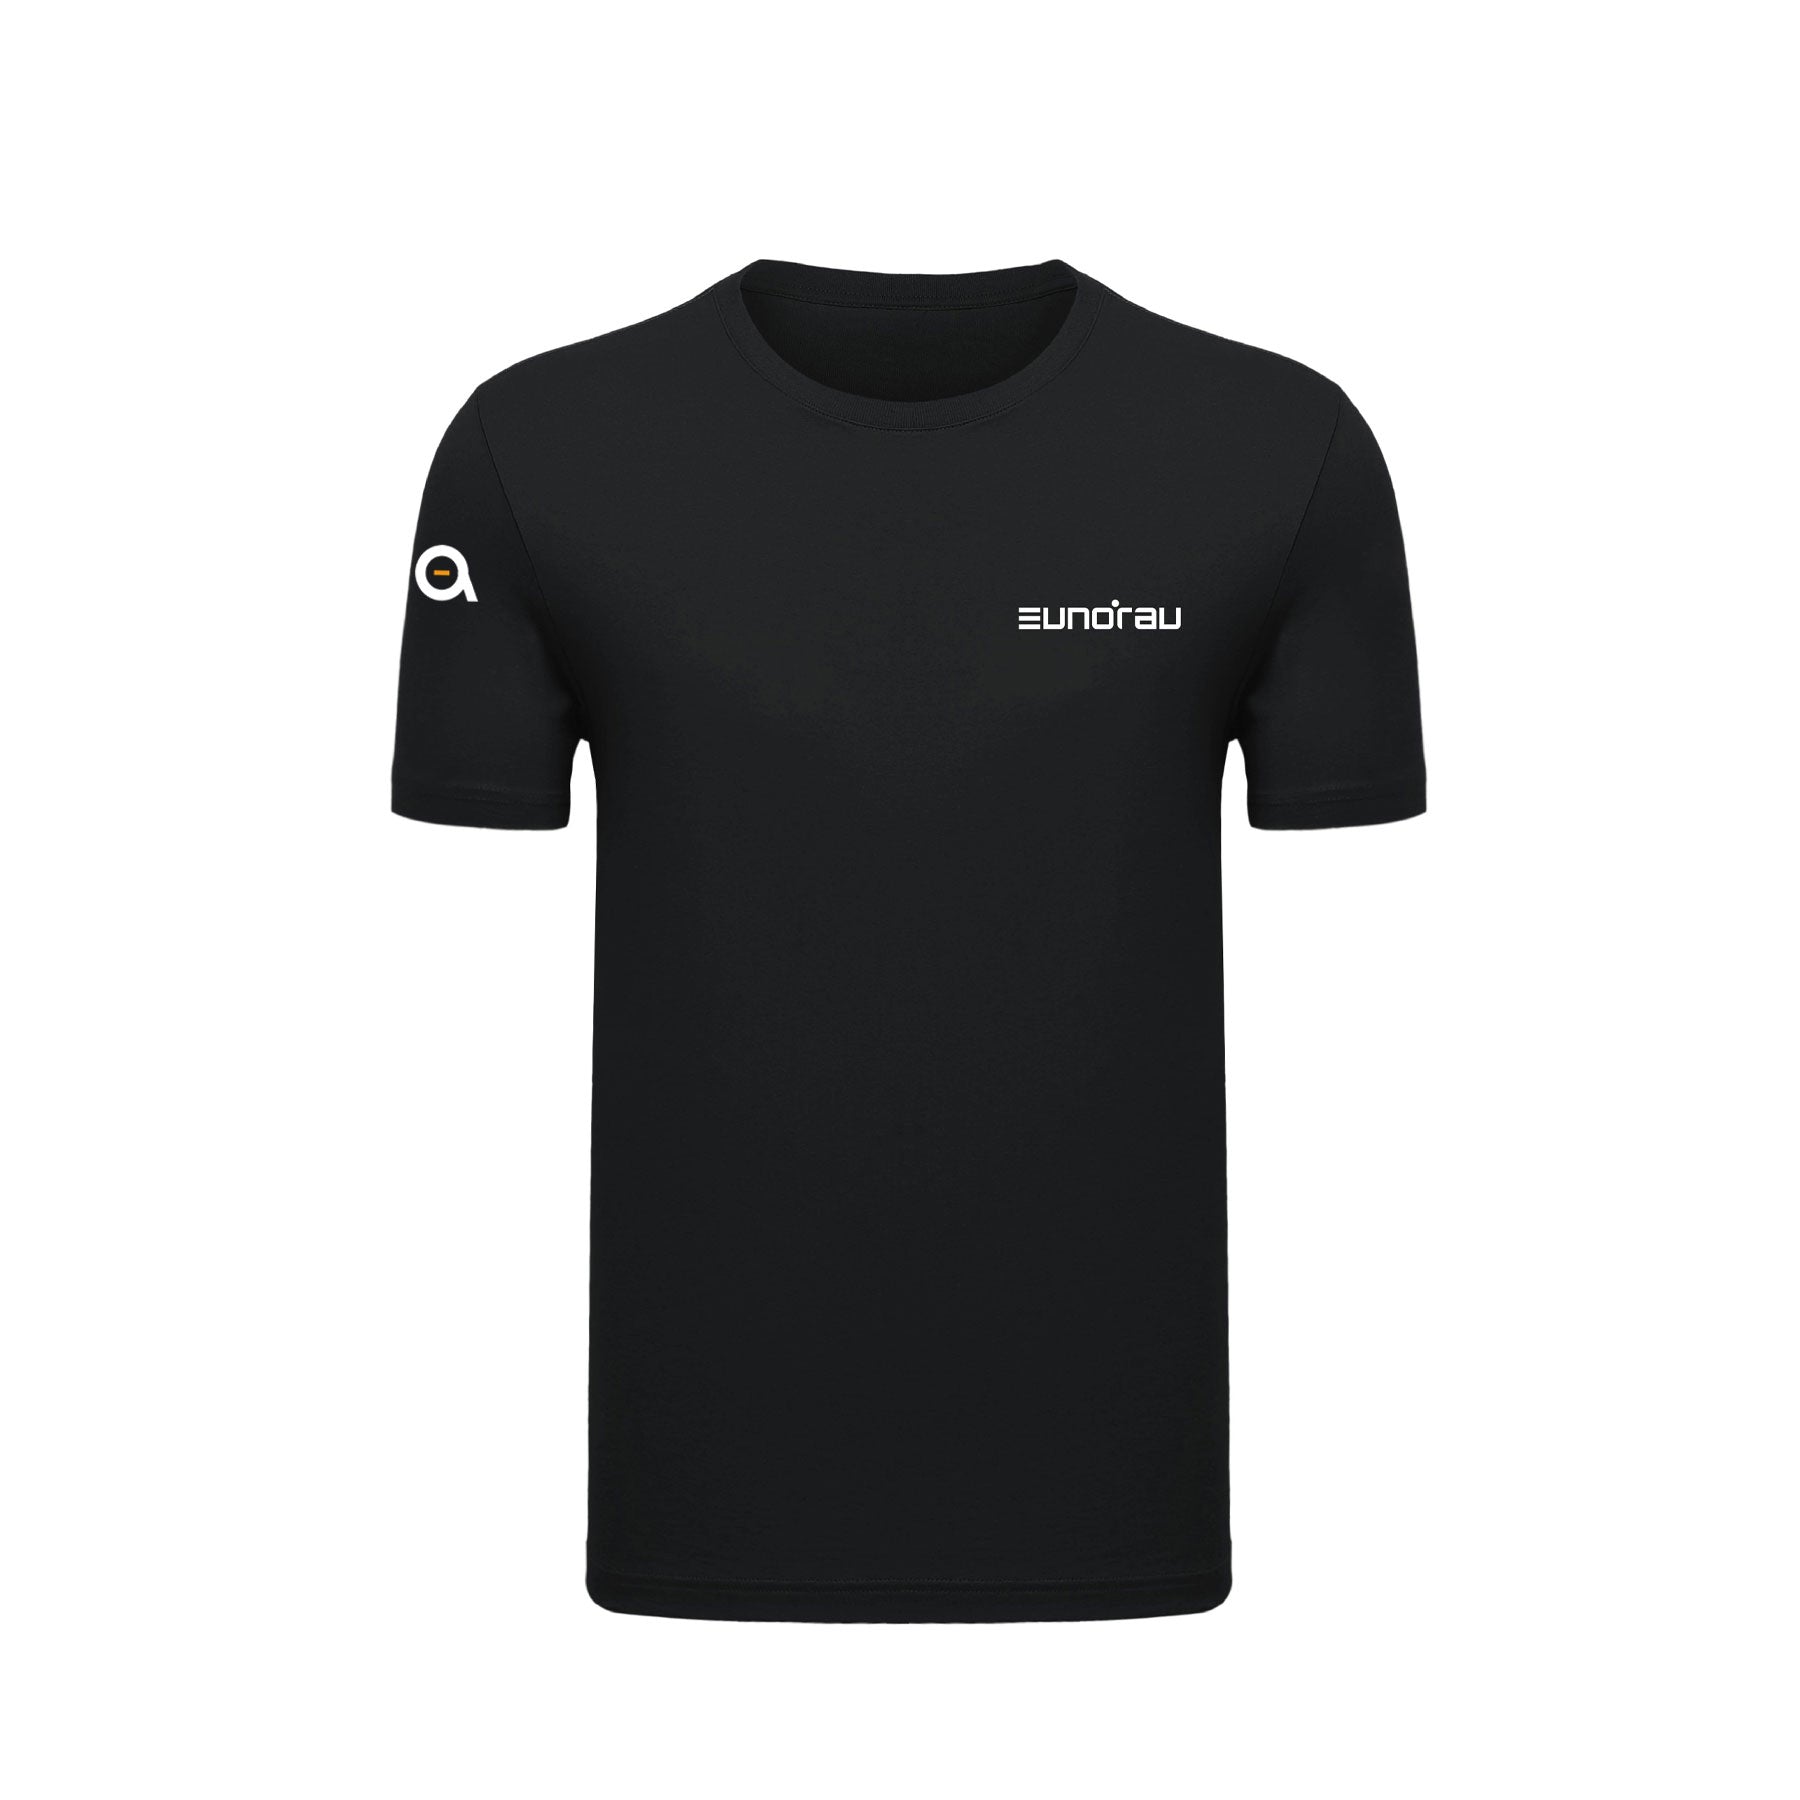 Eunorau T-shirt Black